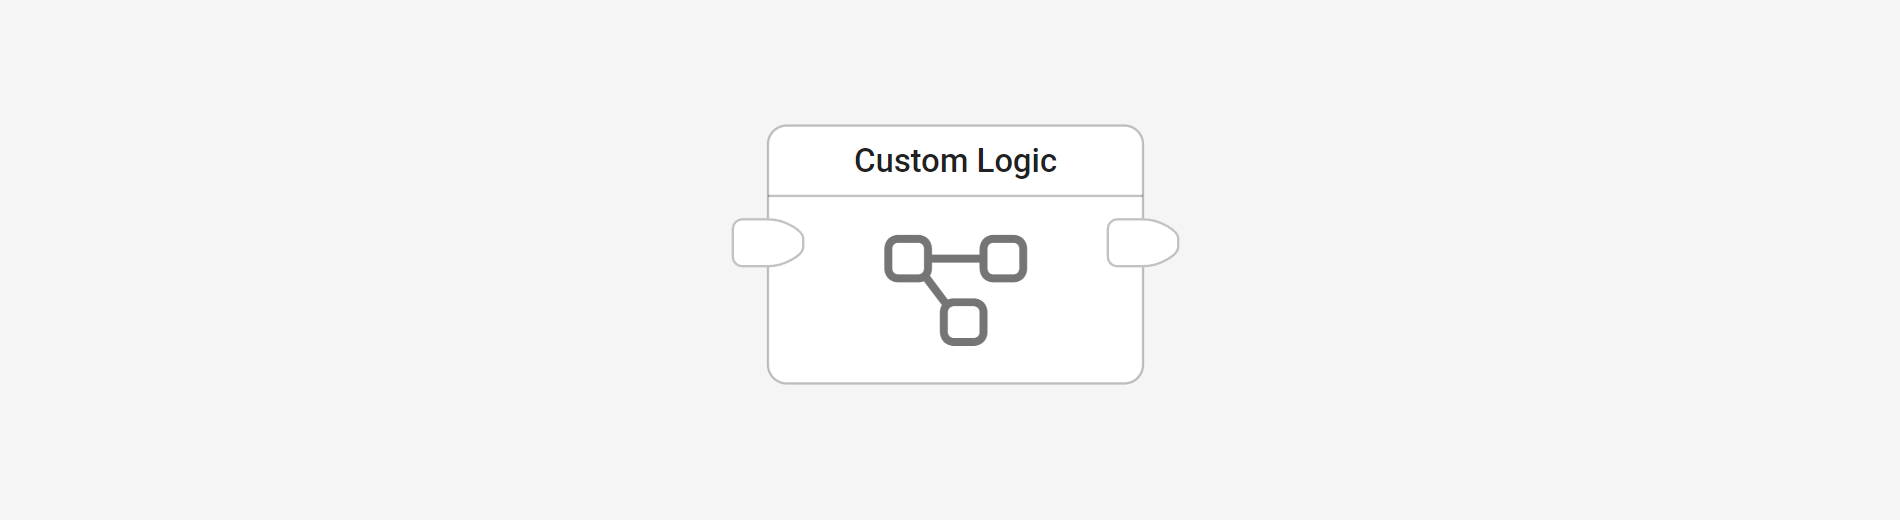 Custom Logic block in flow editor